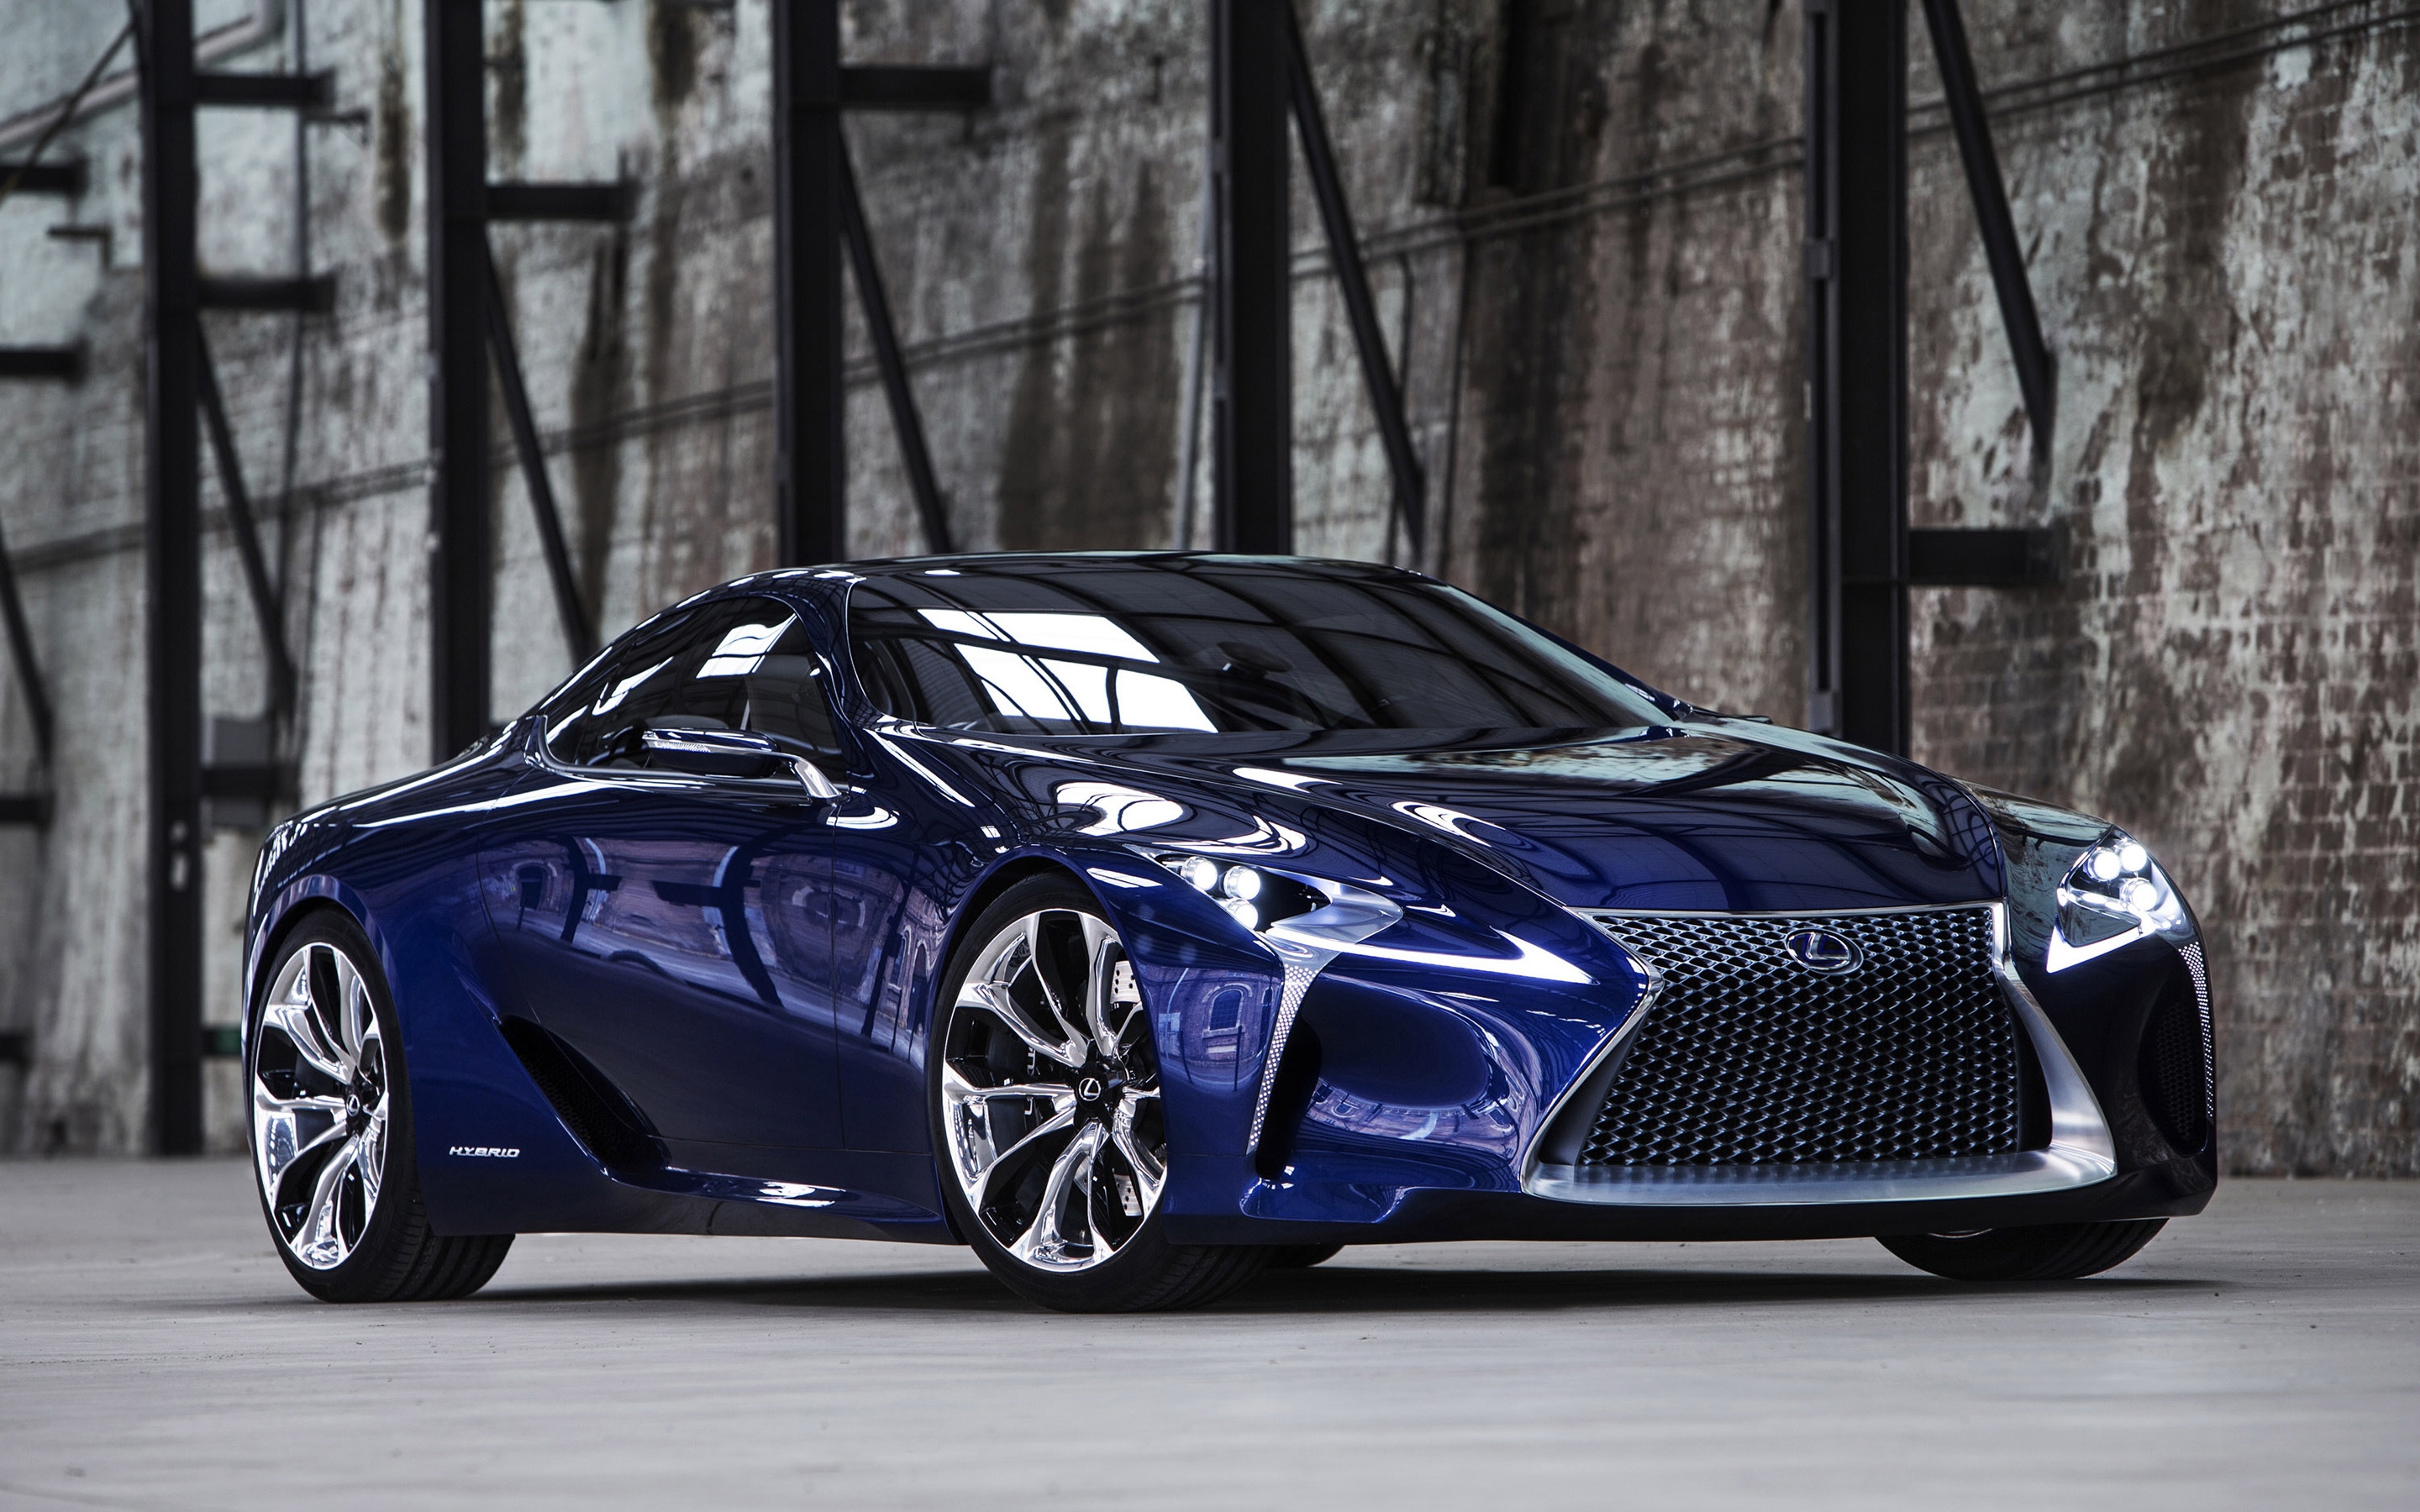 Blue Lexus LF Concept for 2880 x 1800 Retina Display resolution